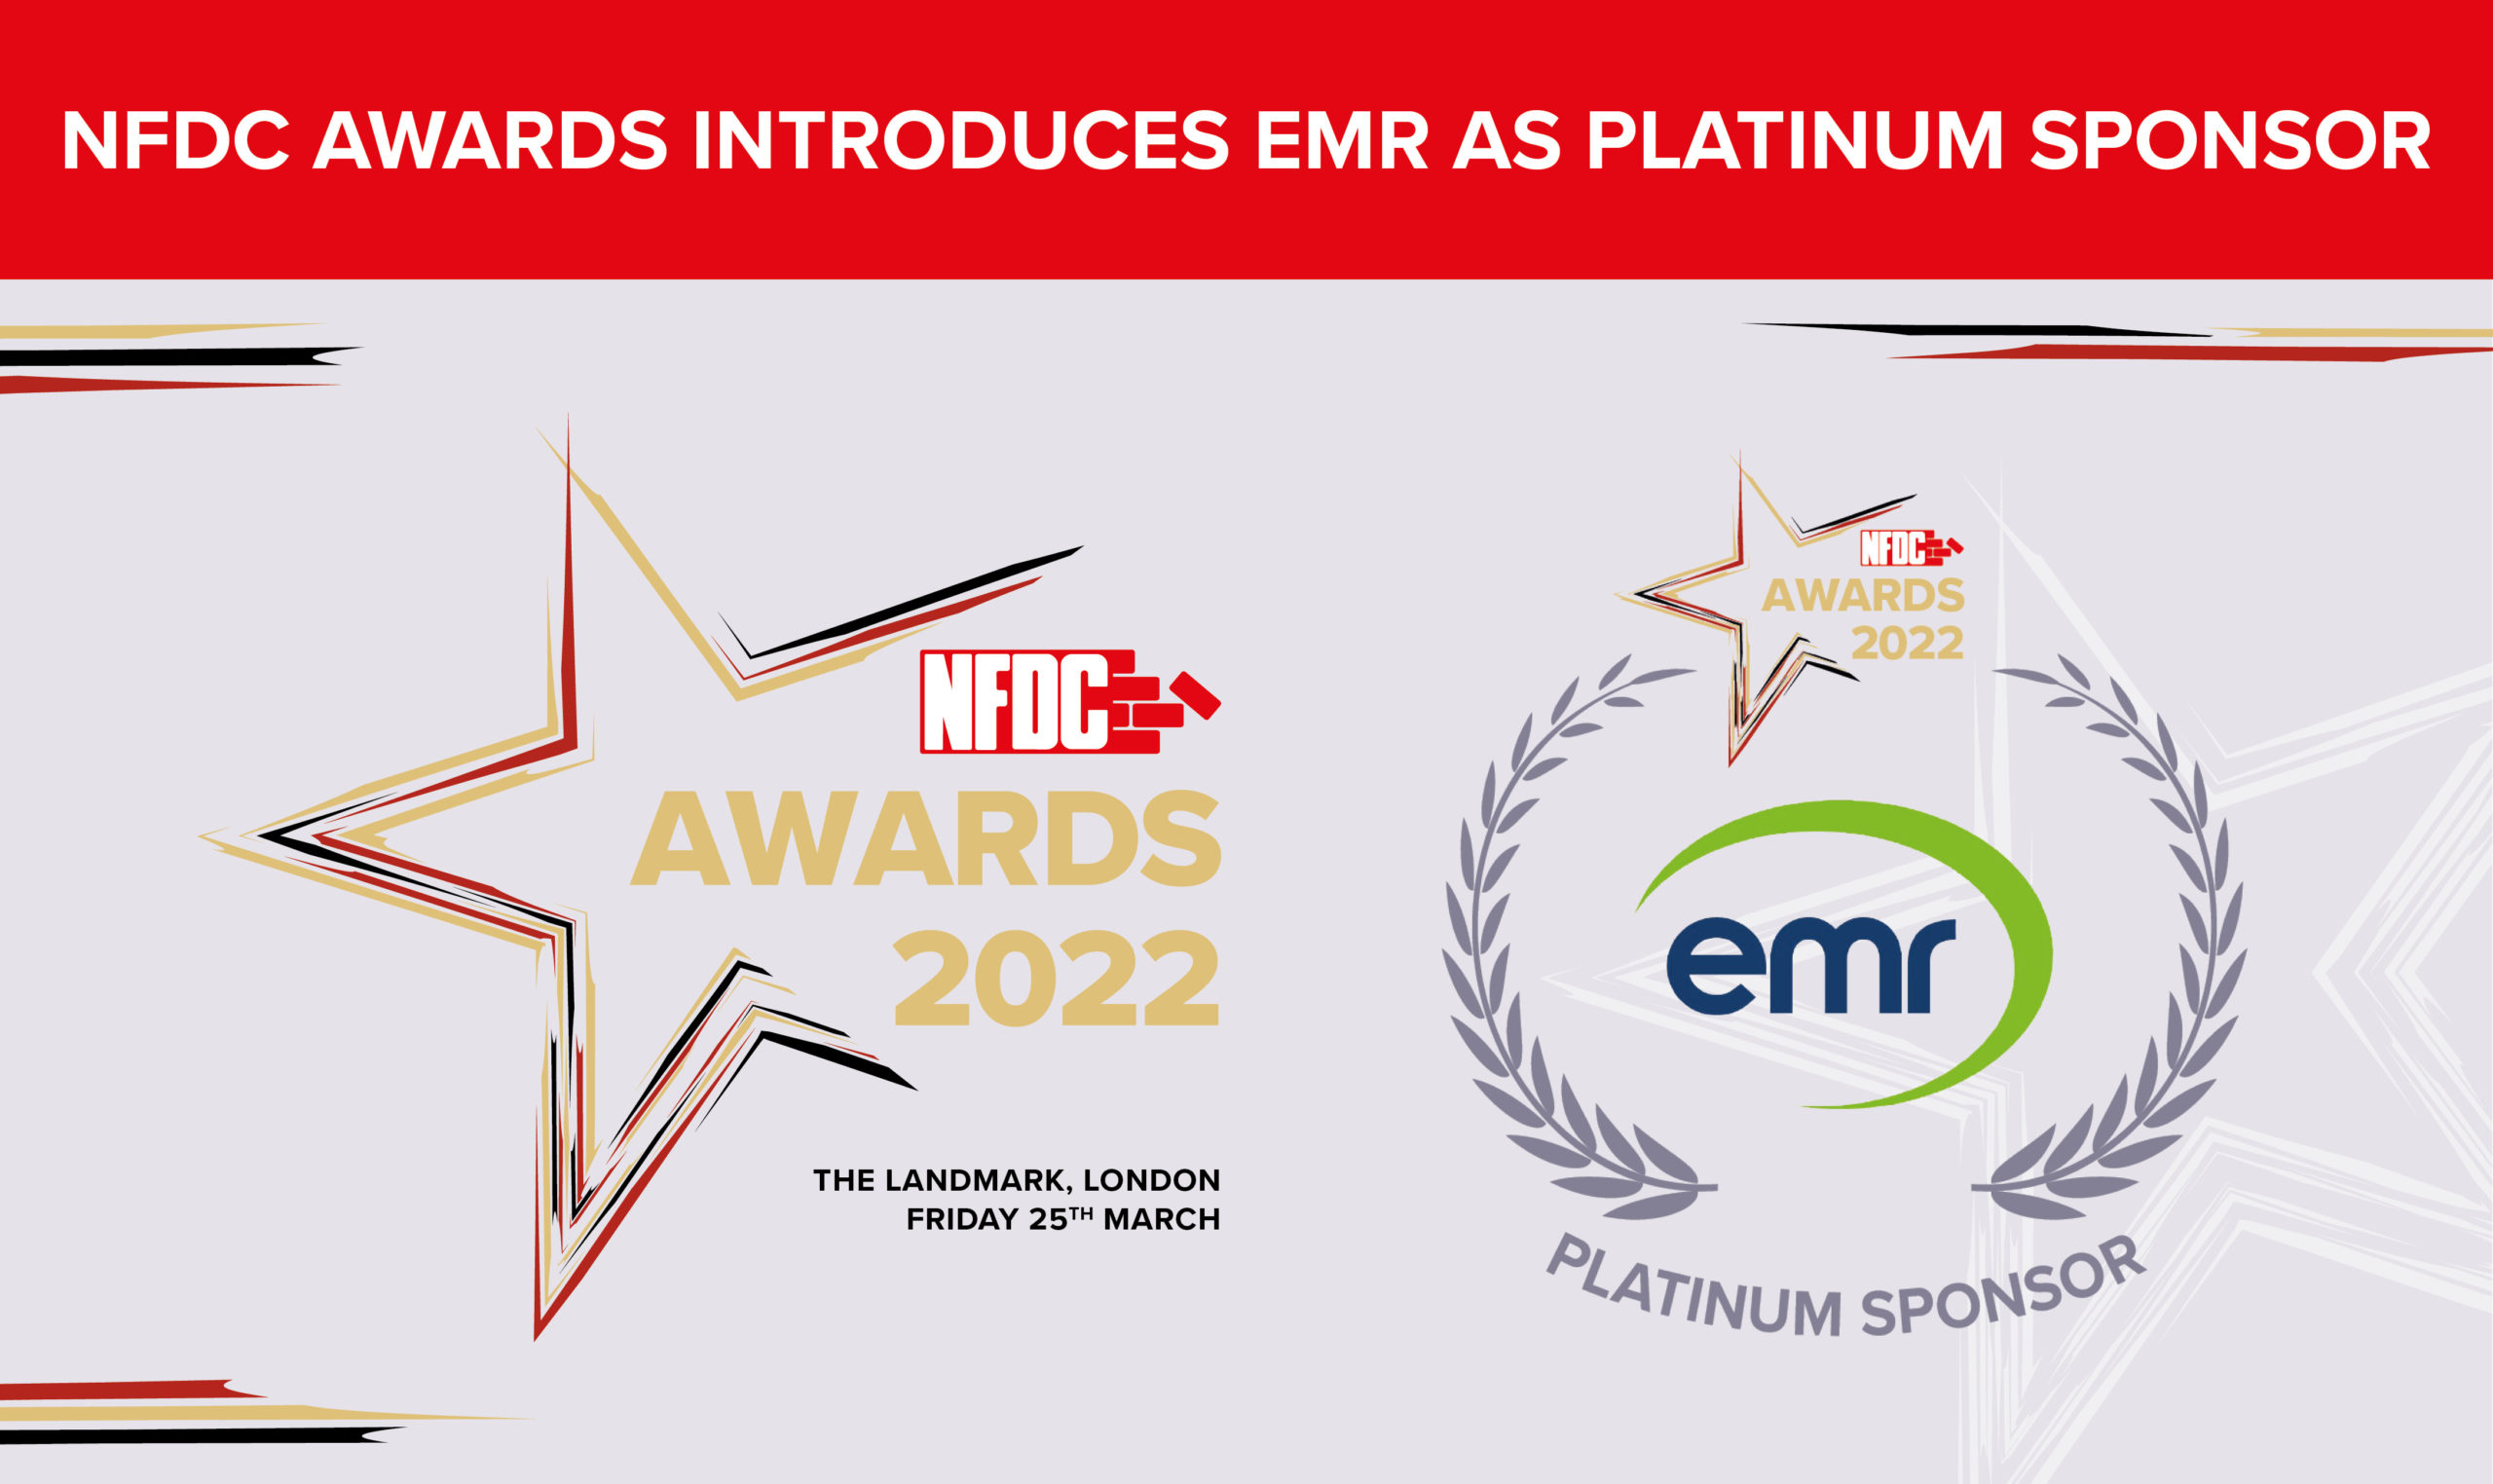 EMR Ltd Announced as Final Platinum Sponsor of NFDC Awards 2022